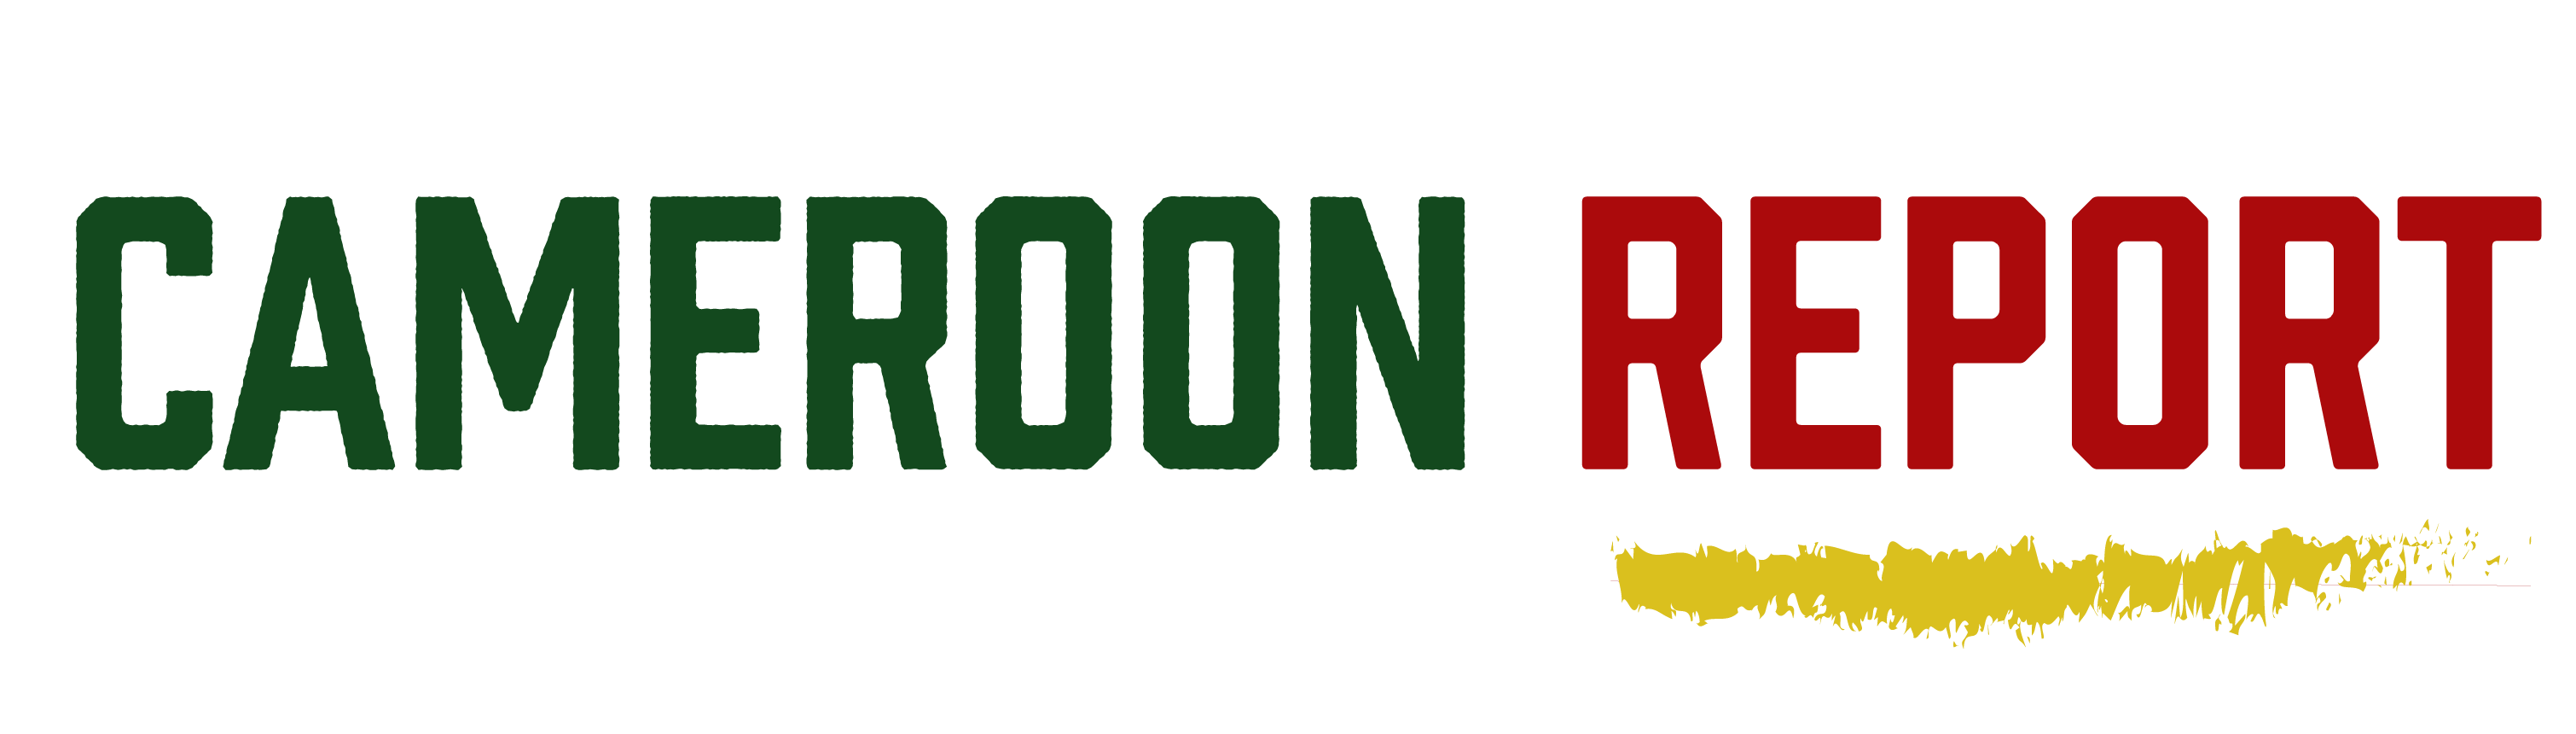 Cameroon Report logo